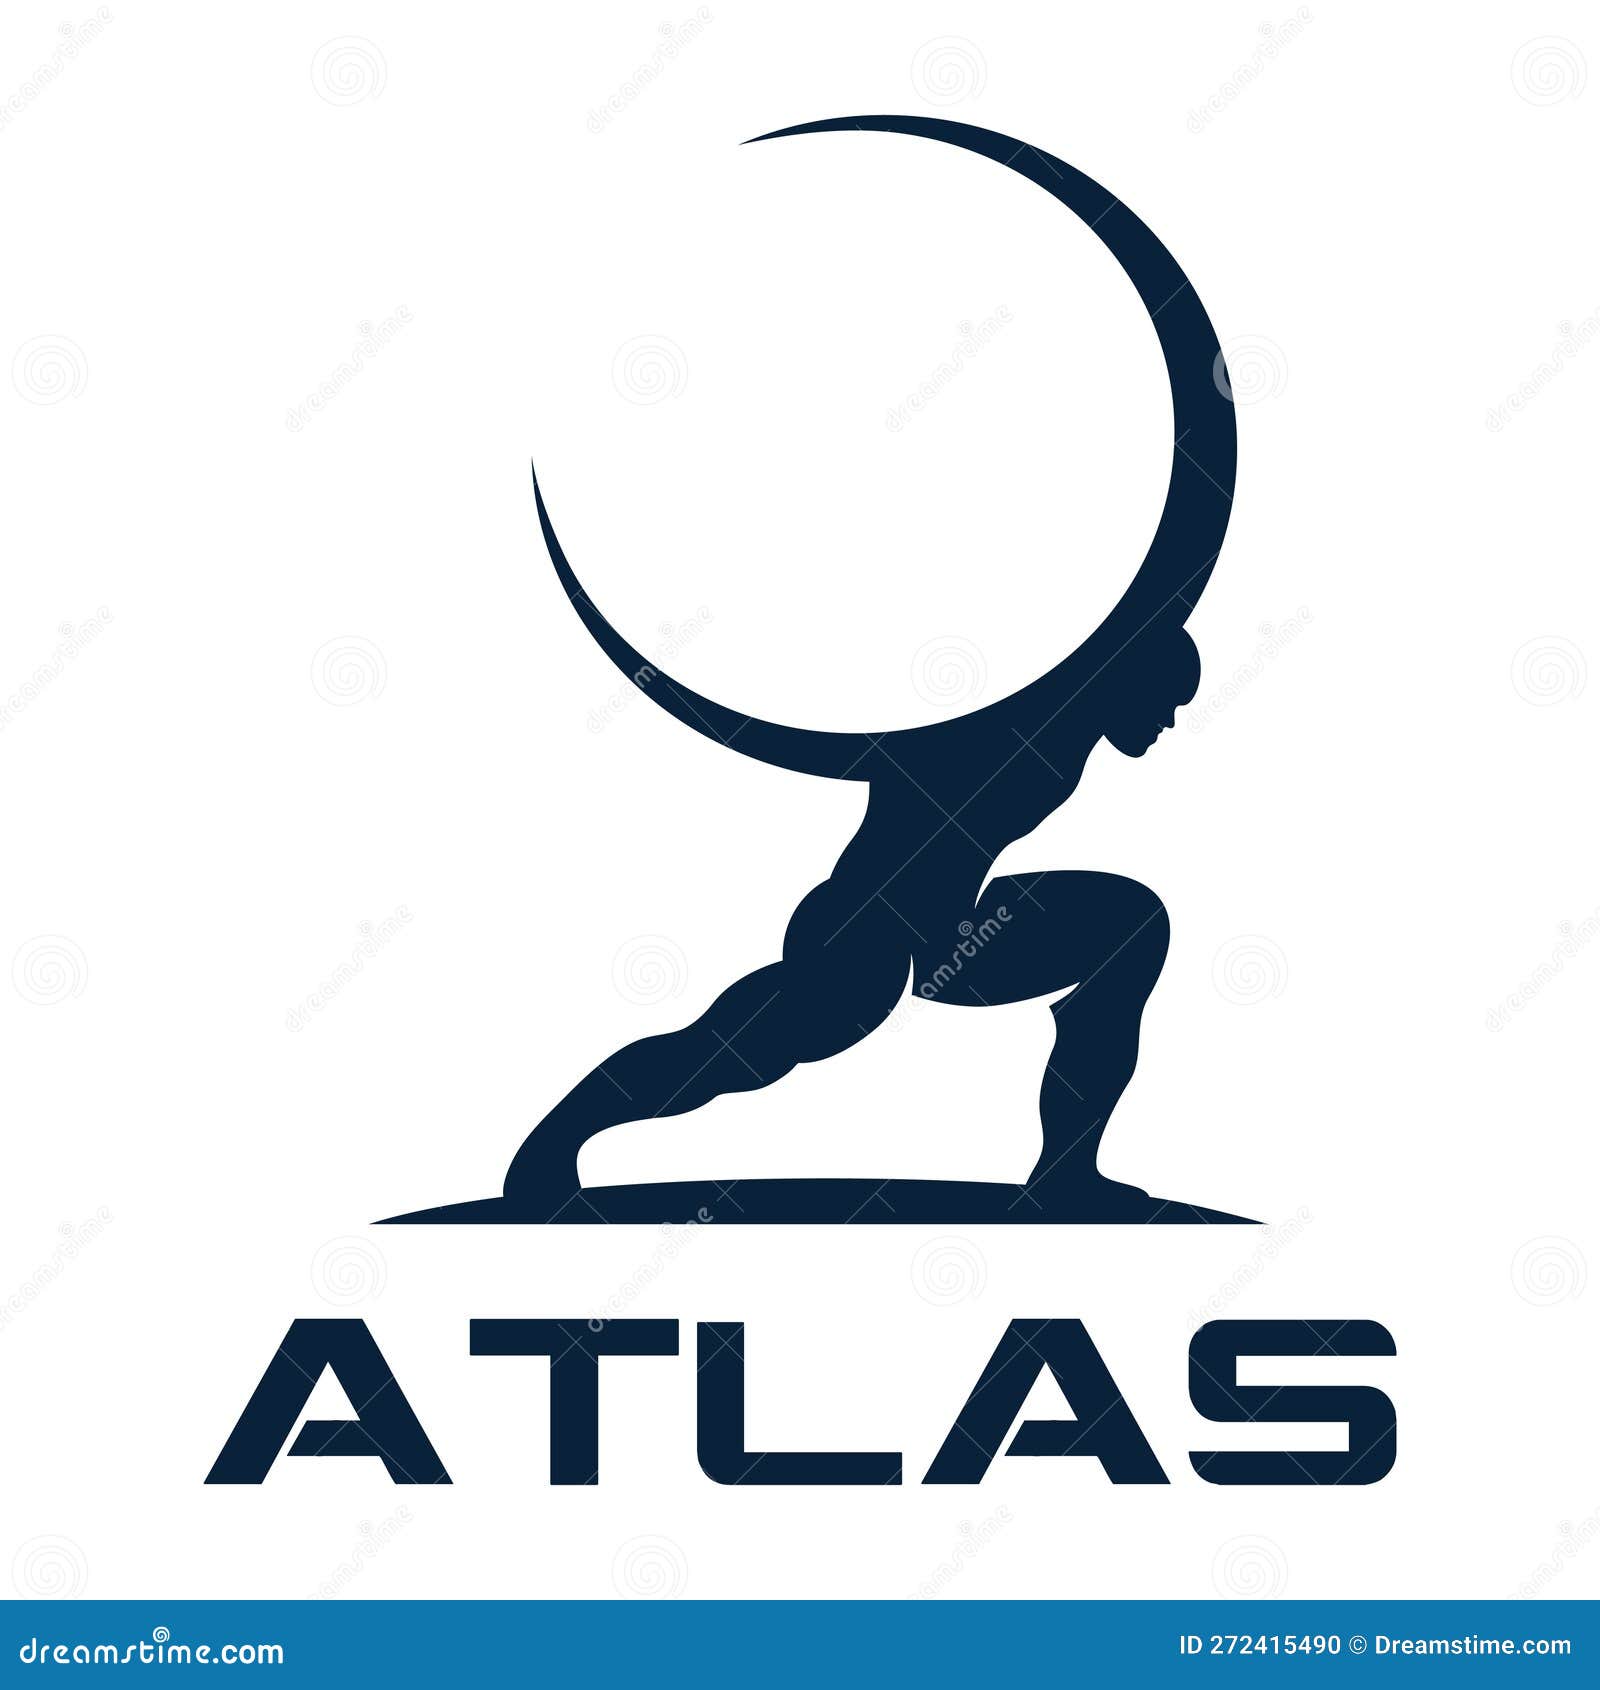 modern atlas logo.  